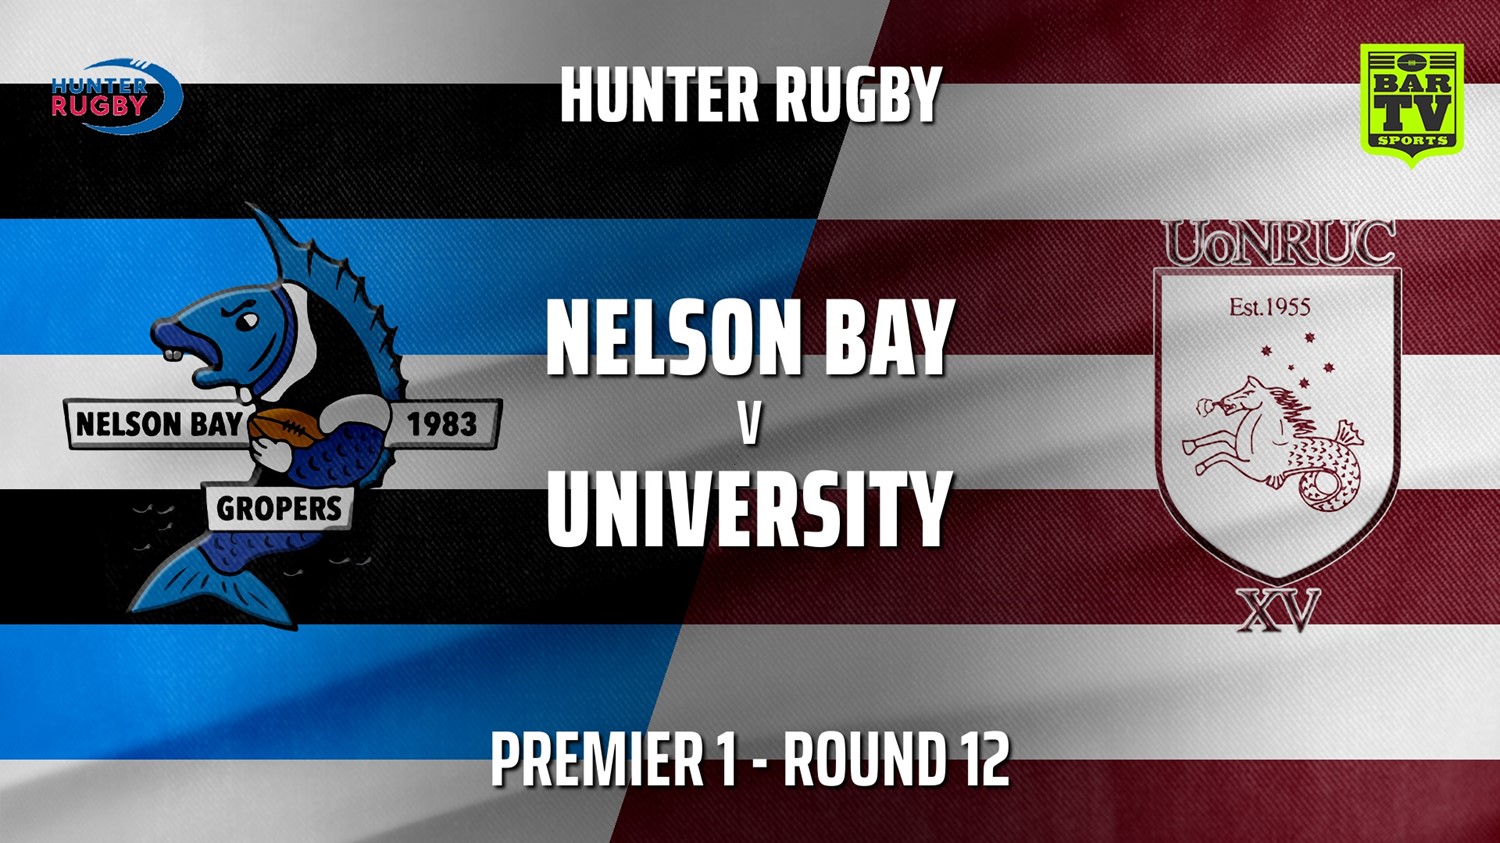 210710-Hunter Rugby Round 12 - Premier 1 - Nelson Bay Gropers v University Of Newcastle Minigame Slate Image